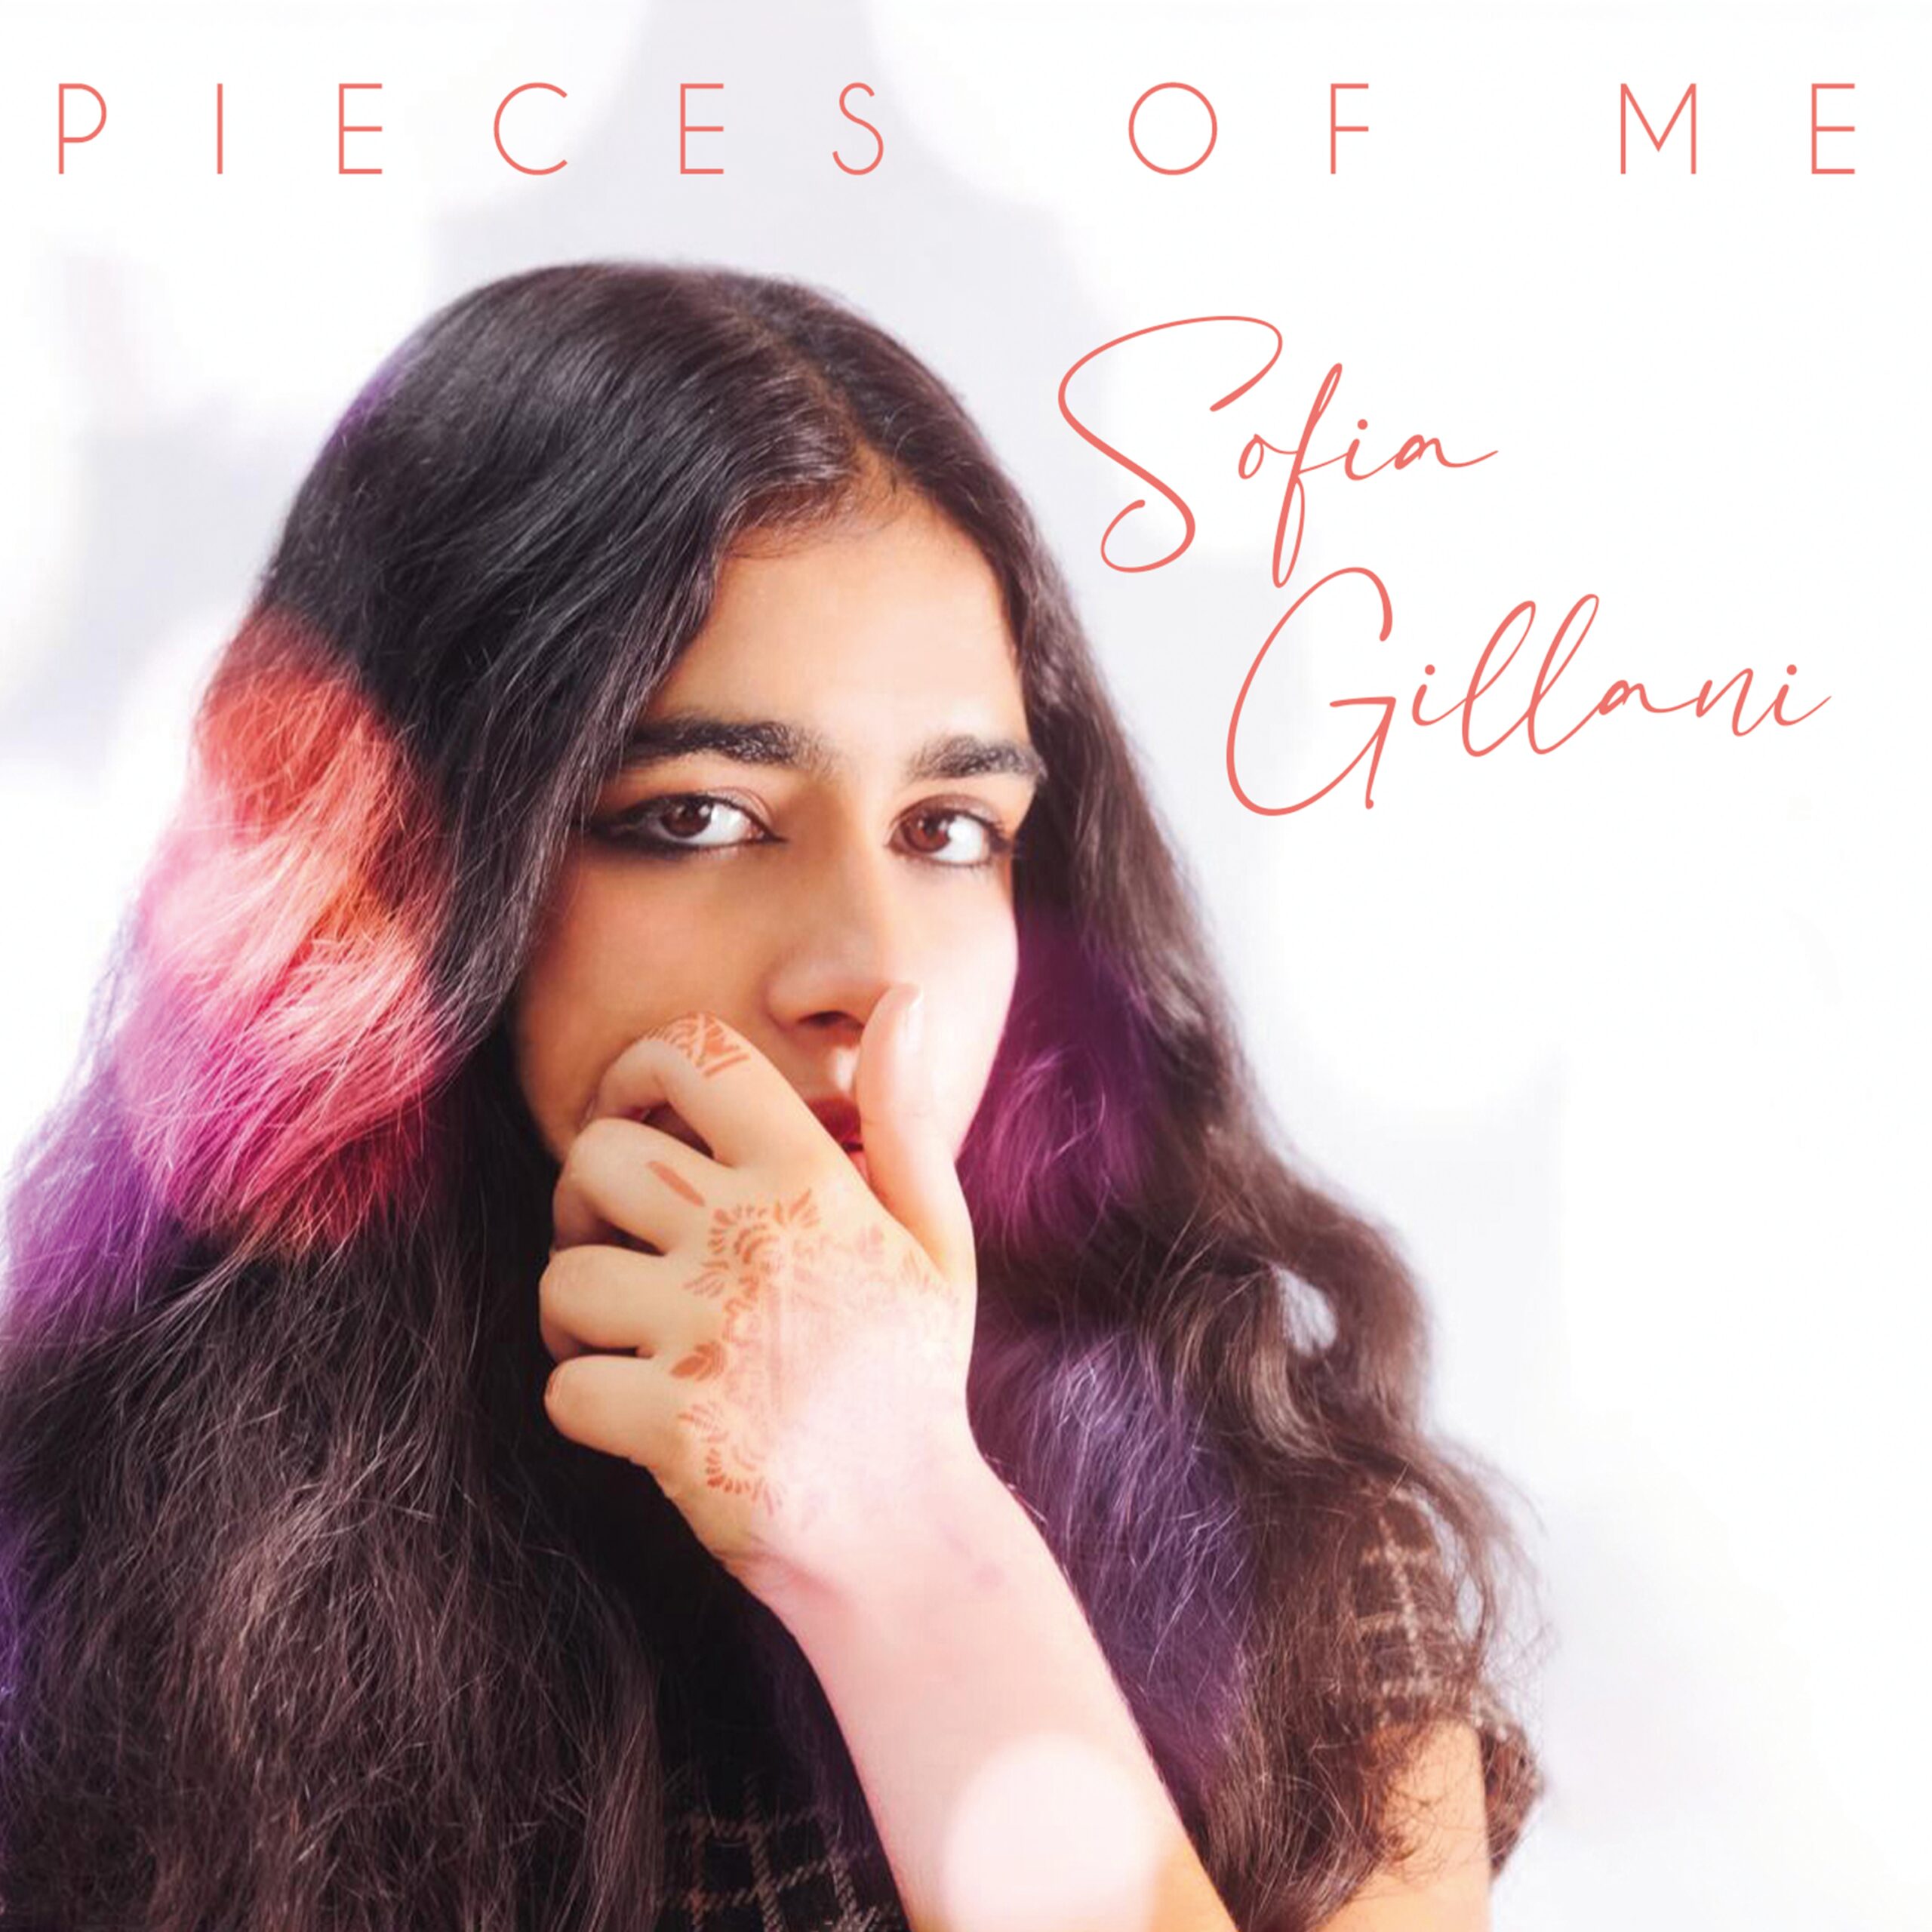 Sofia Gillani drops new album ‘Pieces Of Me’